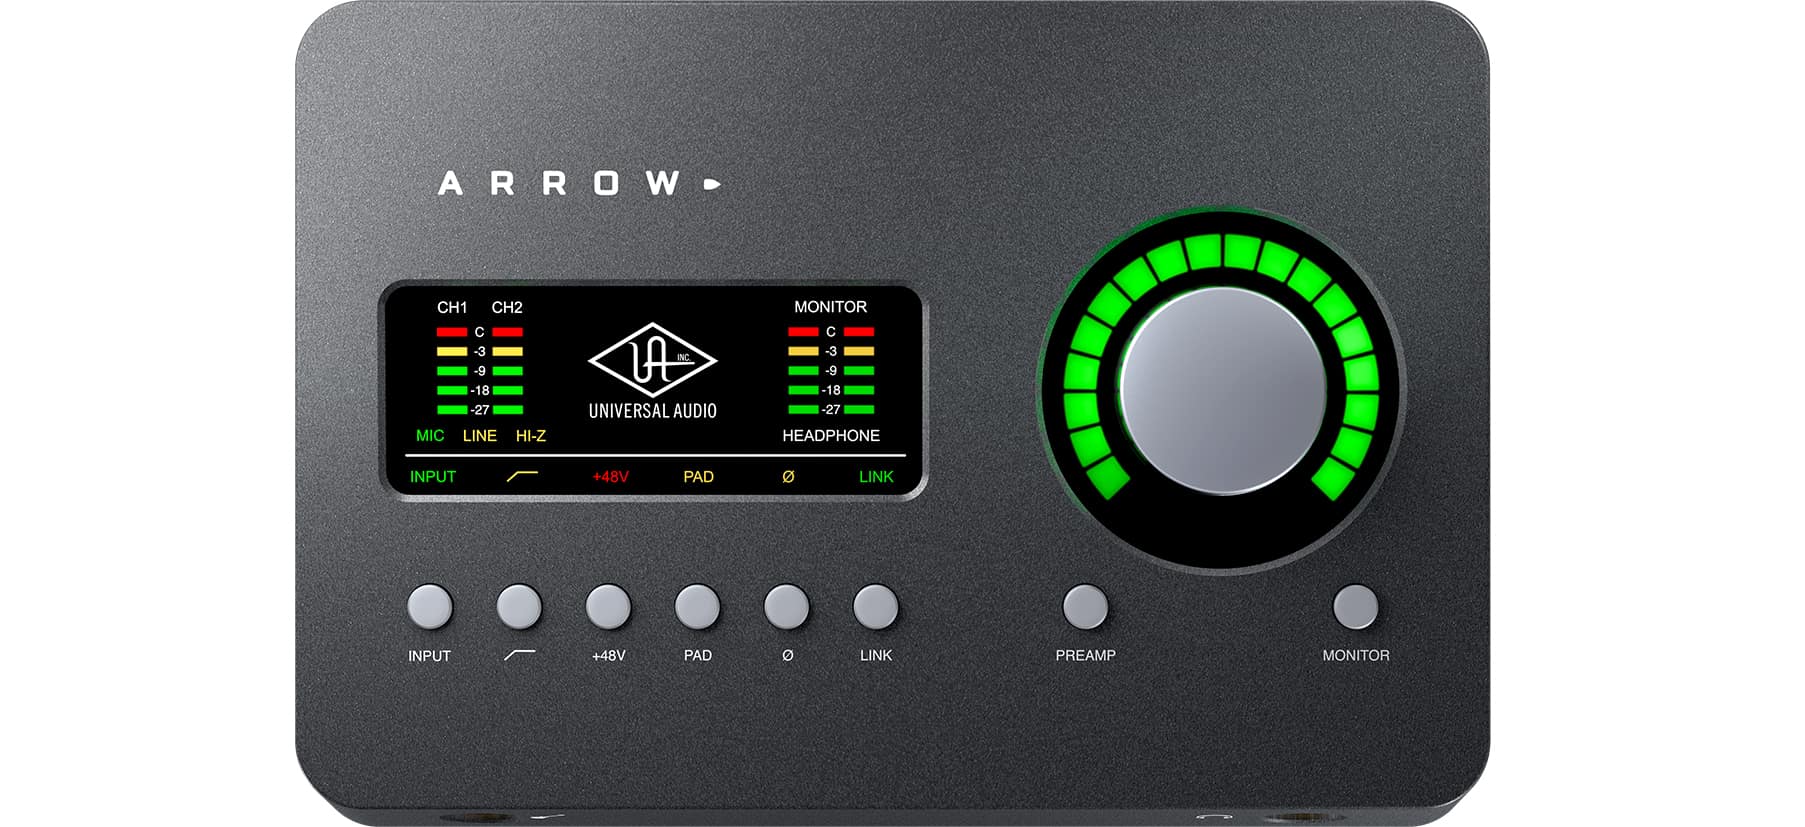 Universal Audio Ships Arrow Desktop AudioInterface For Music Creators